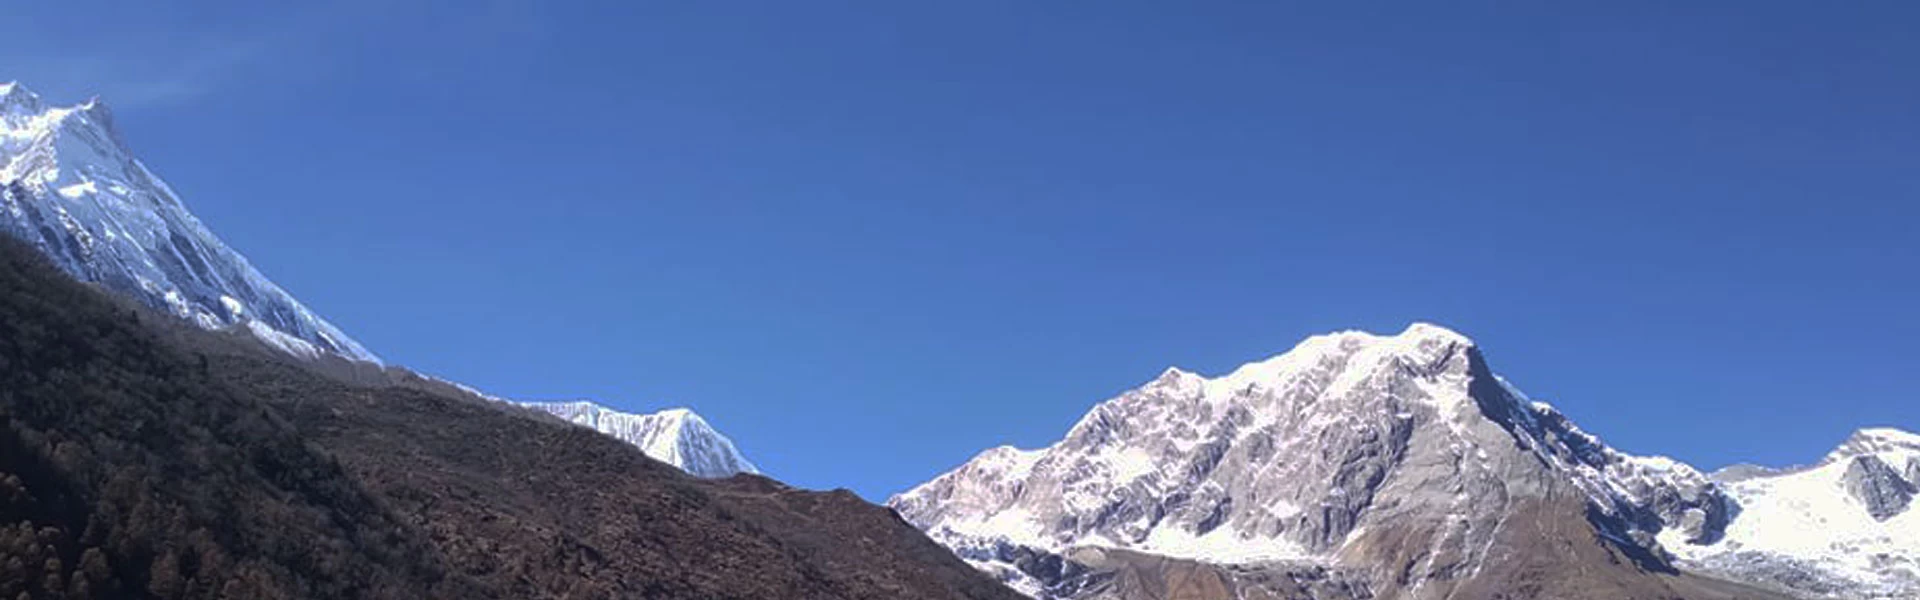 Manaslu Himalayan Range